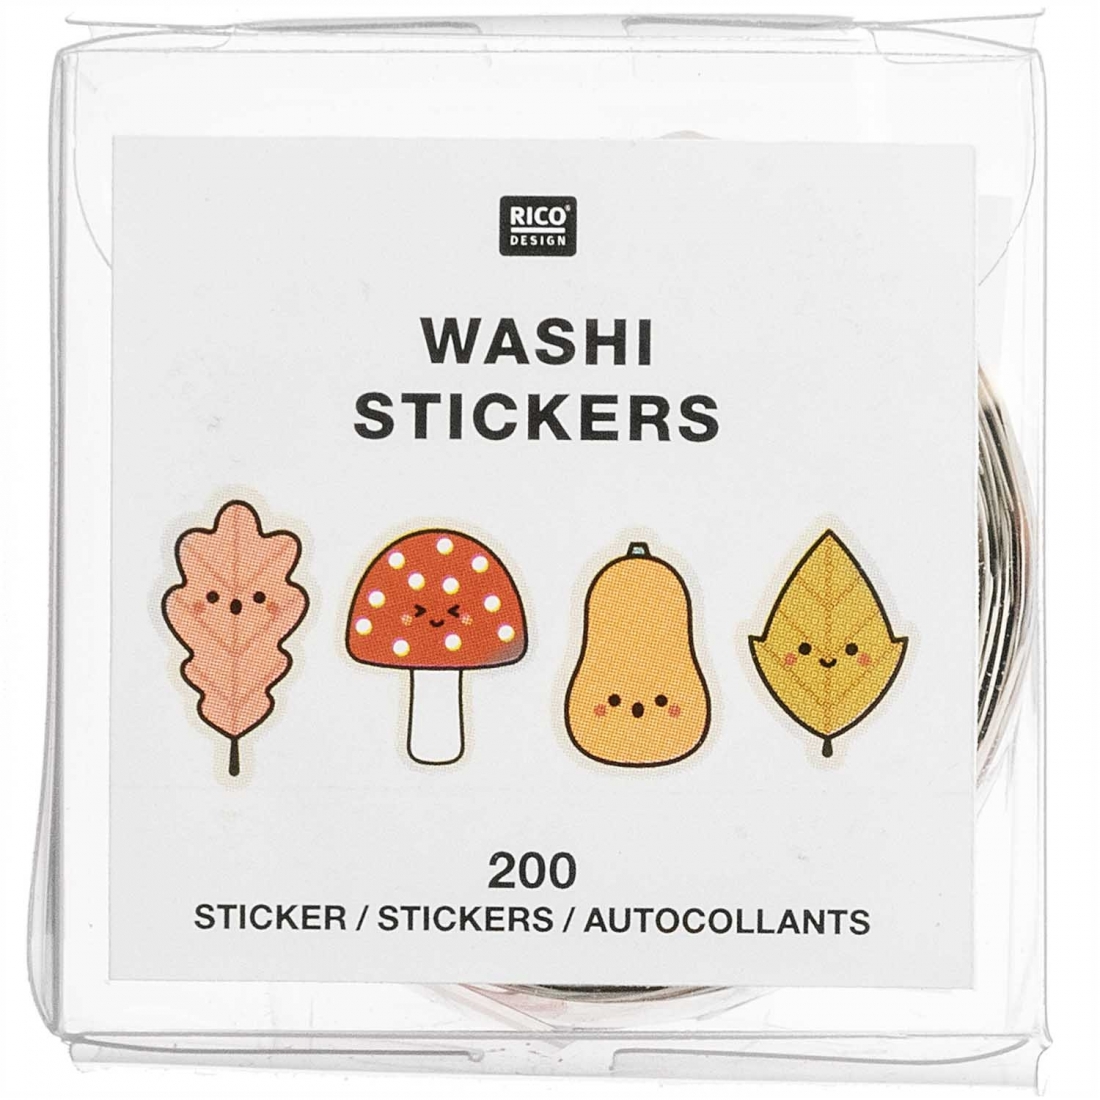 Washi sticker Fall